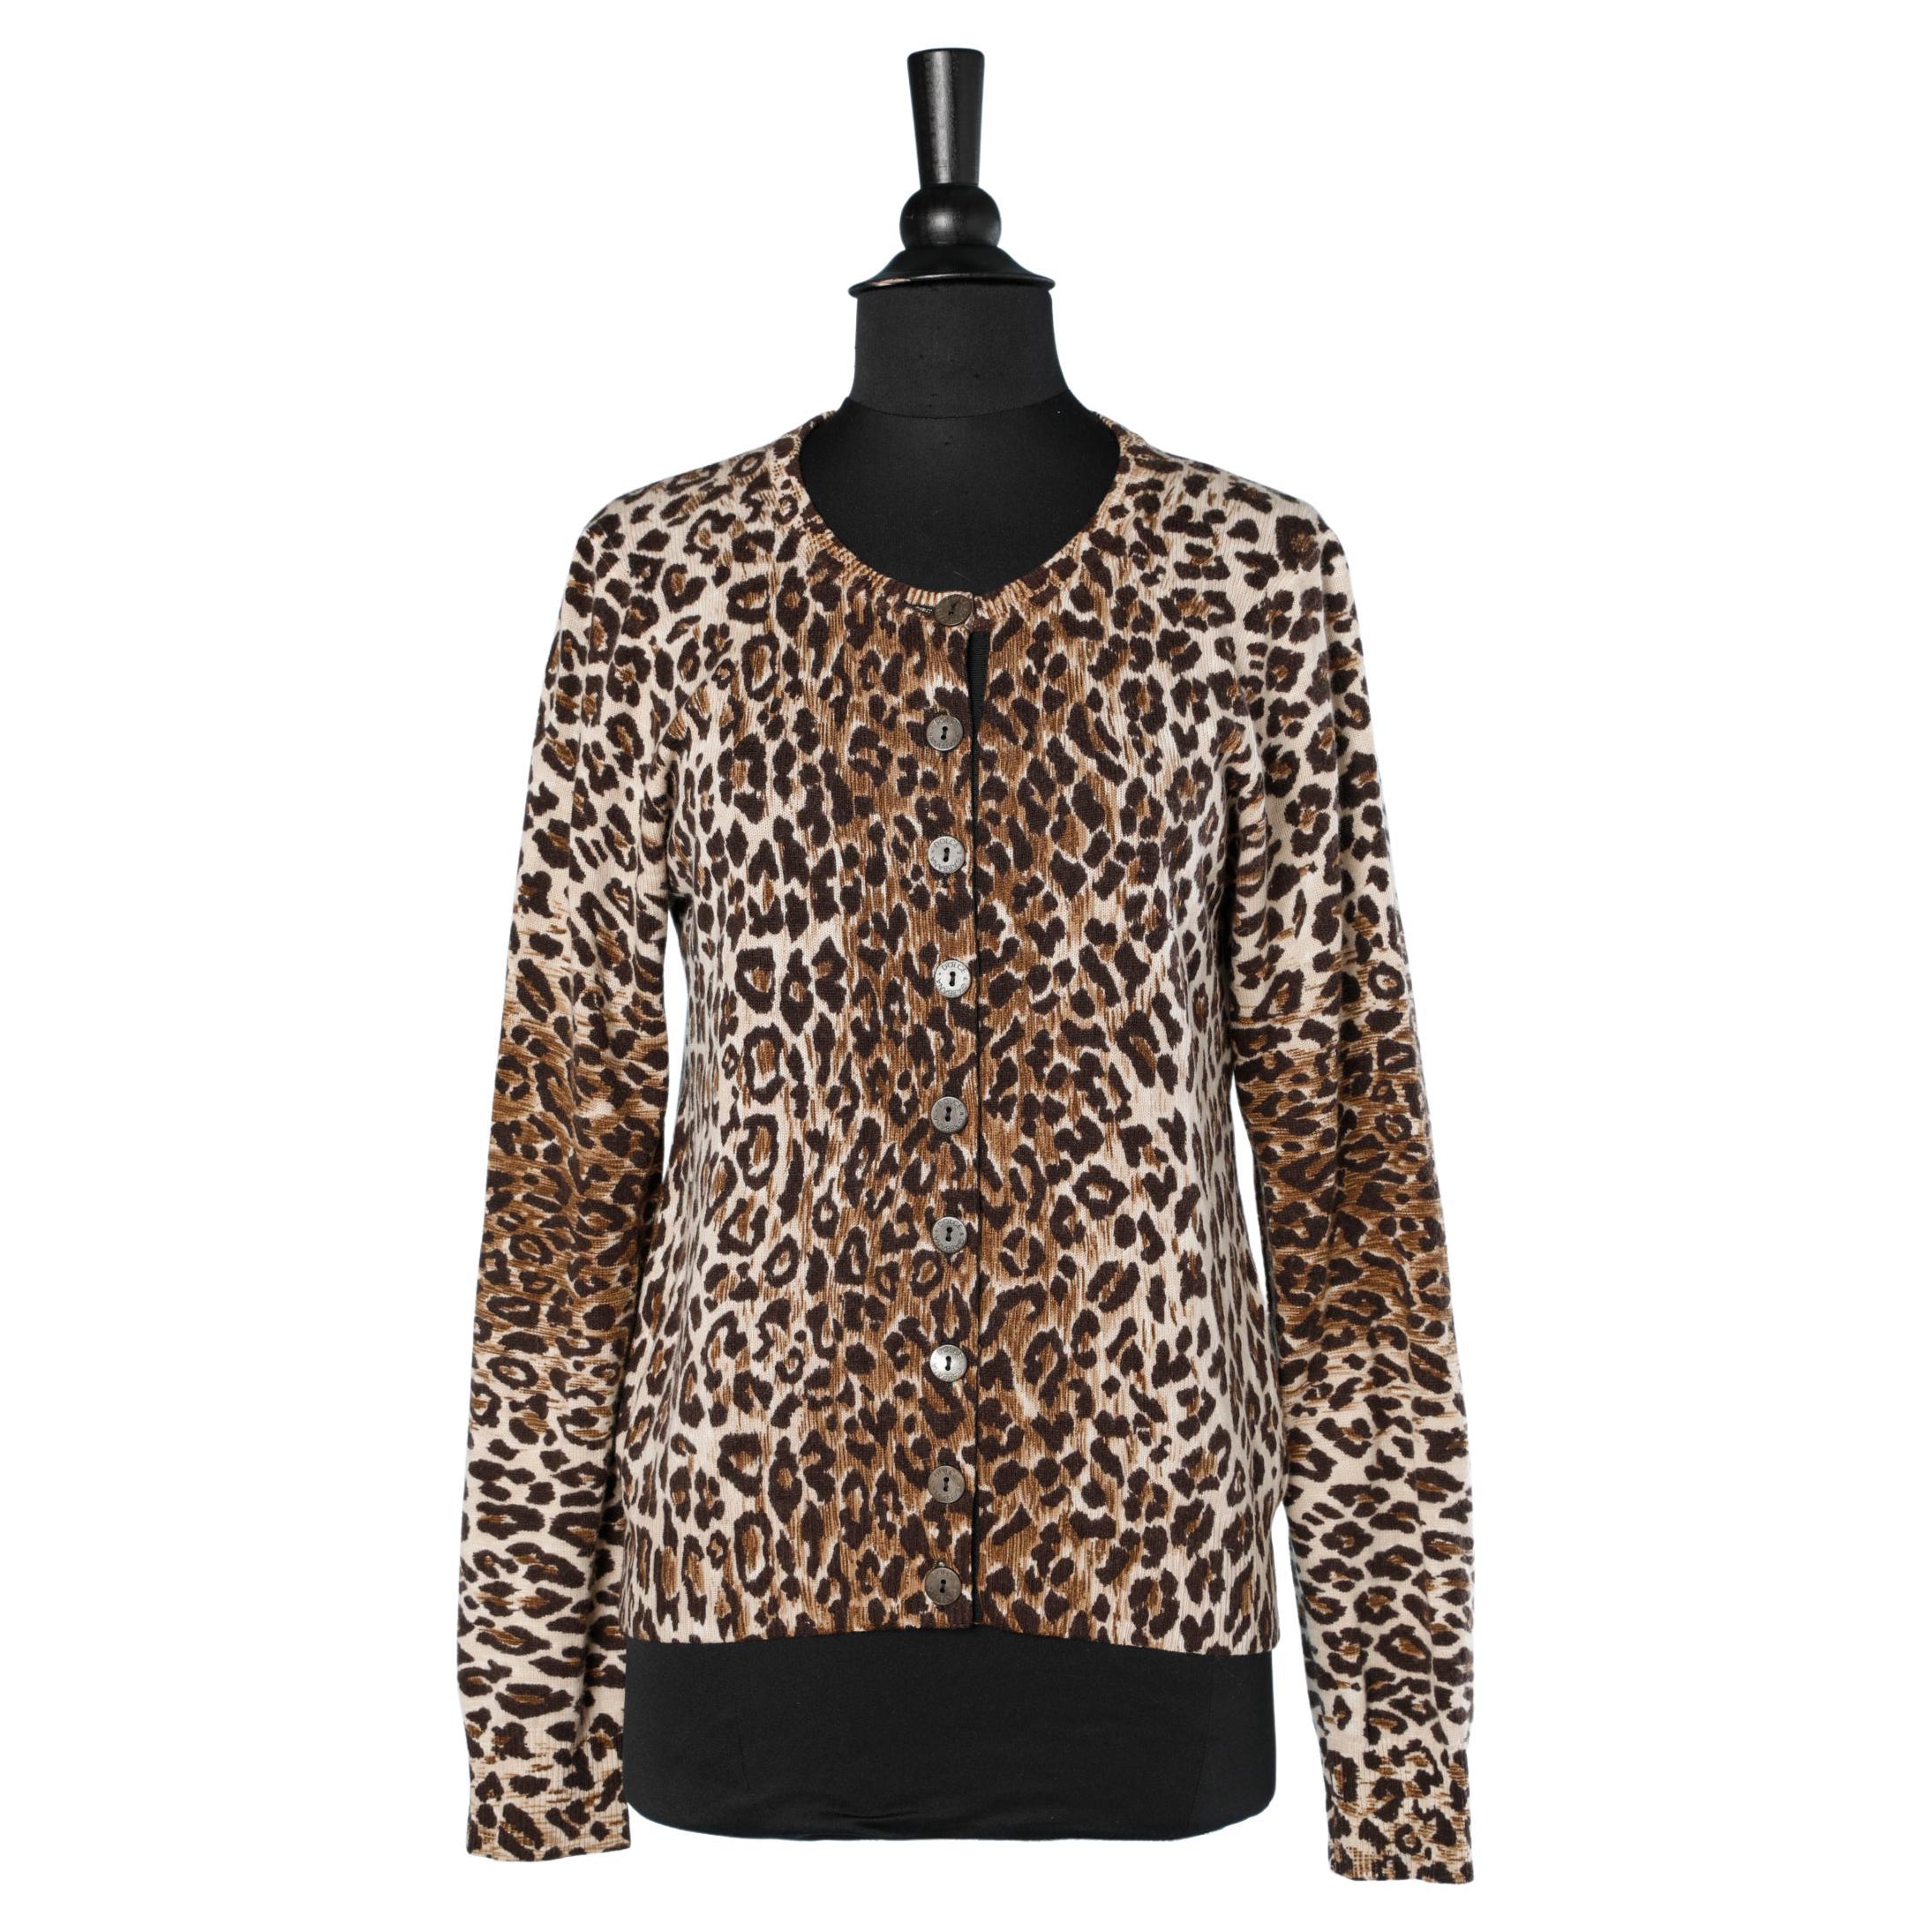 Leopard printed cachemire knit cardigan Dolce & Gabbana 